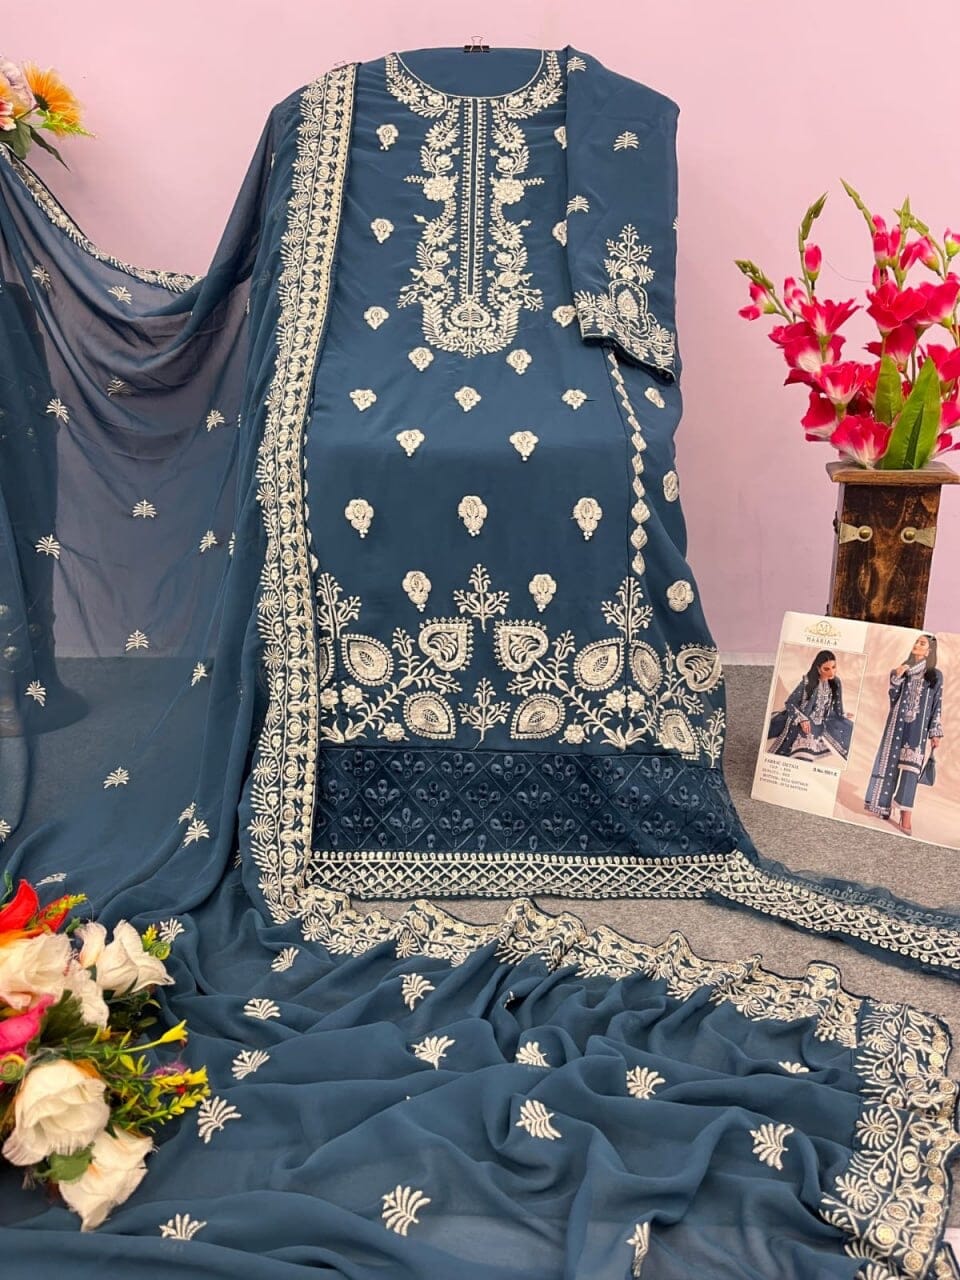 Maria 1061E Fox Georgette White Embroidery Pakistani Suit Designer Suits Shopin Di Apparels 